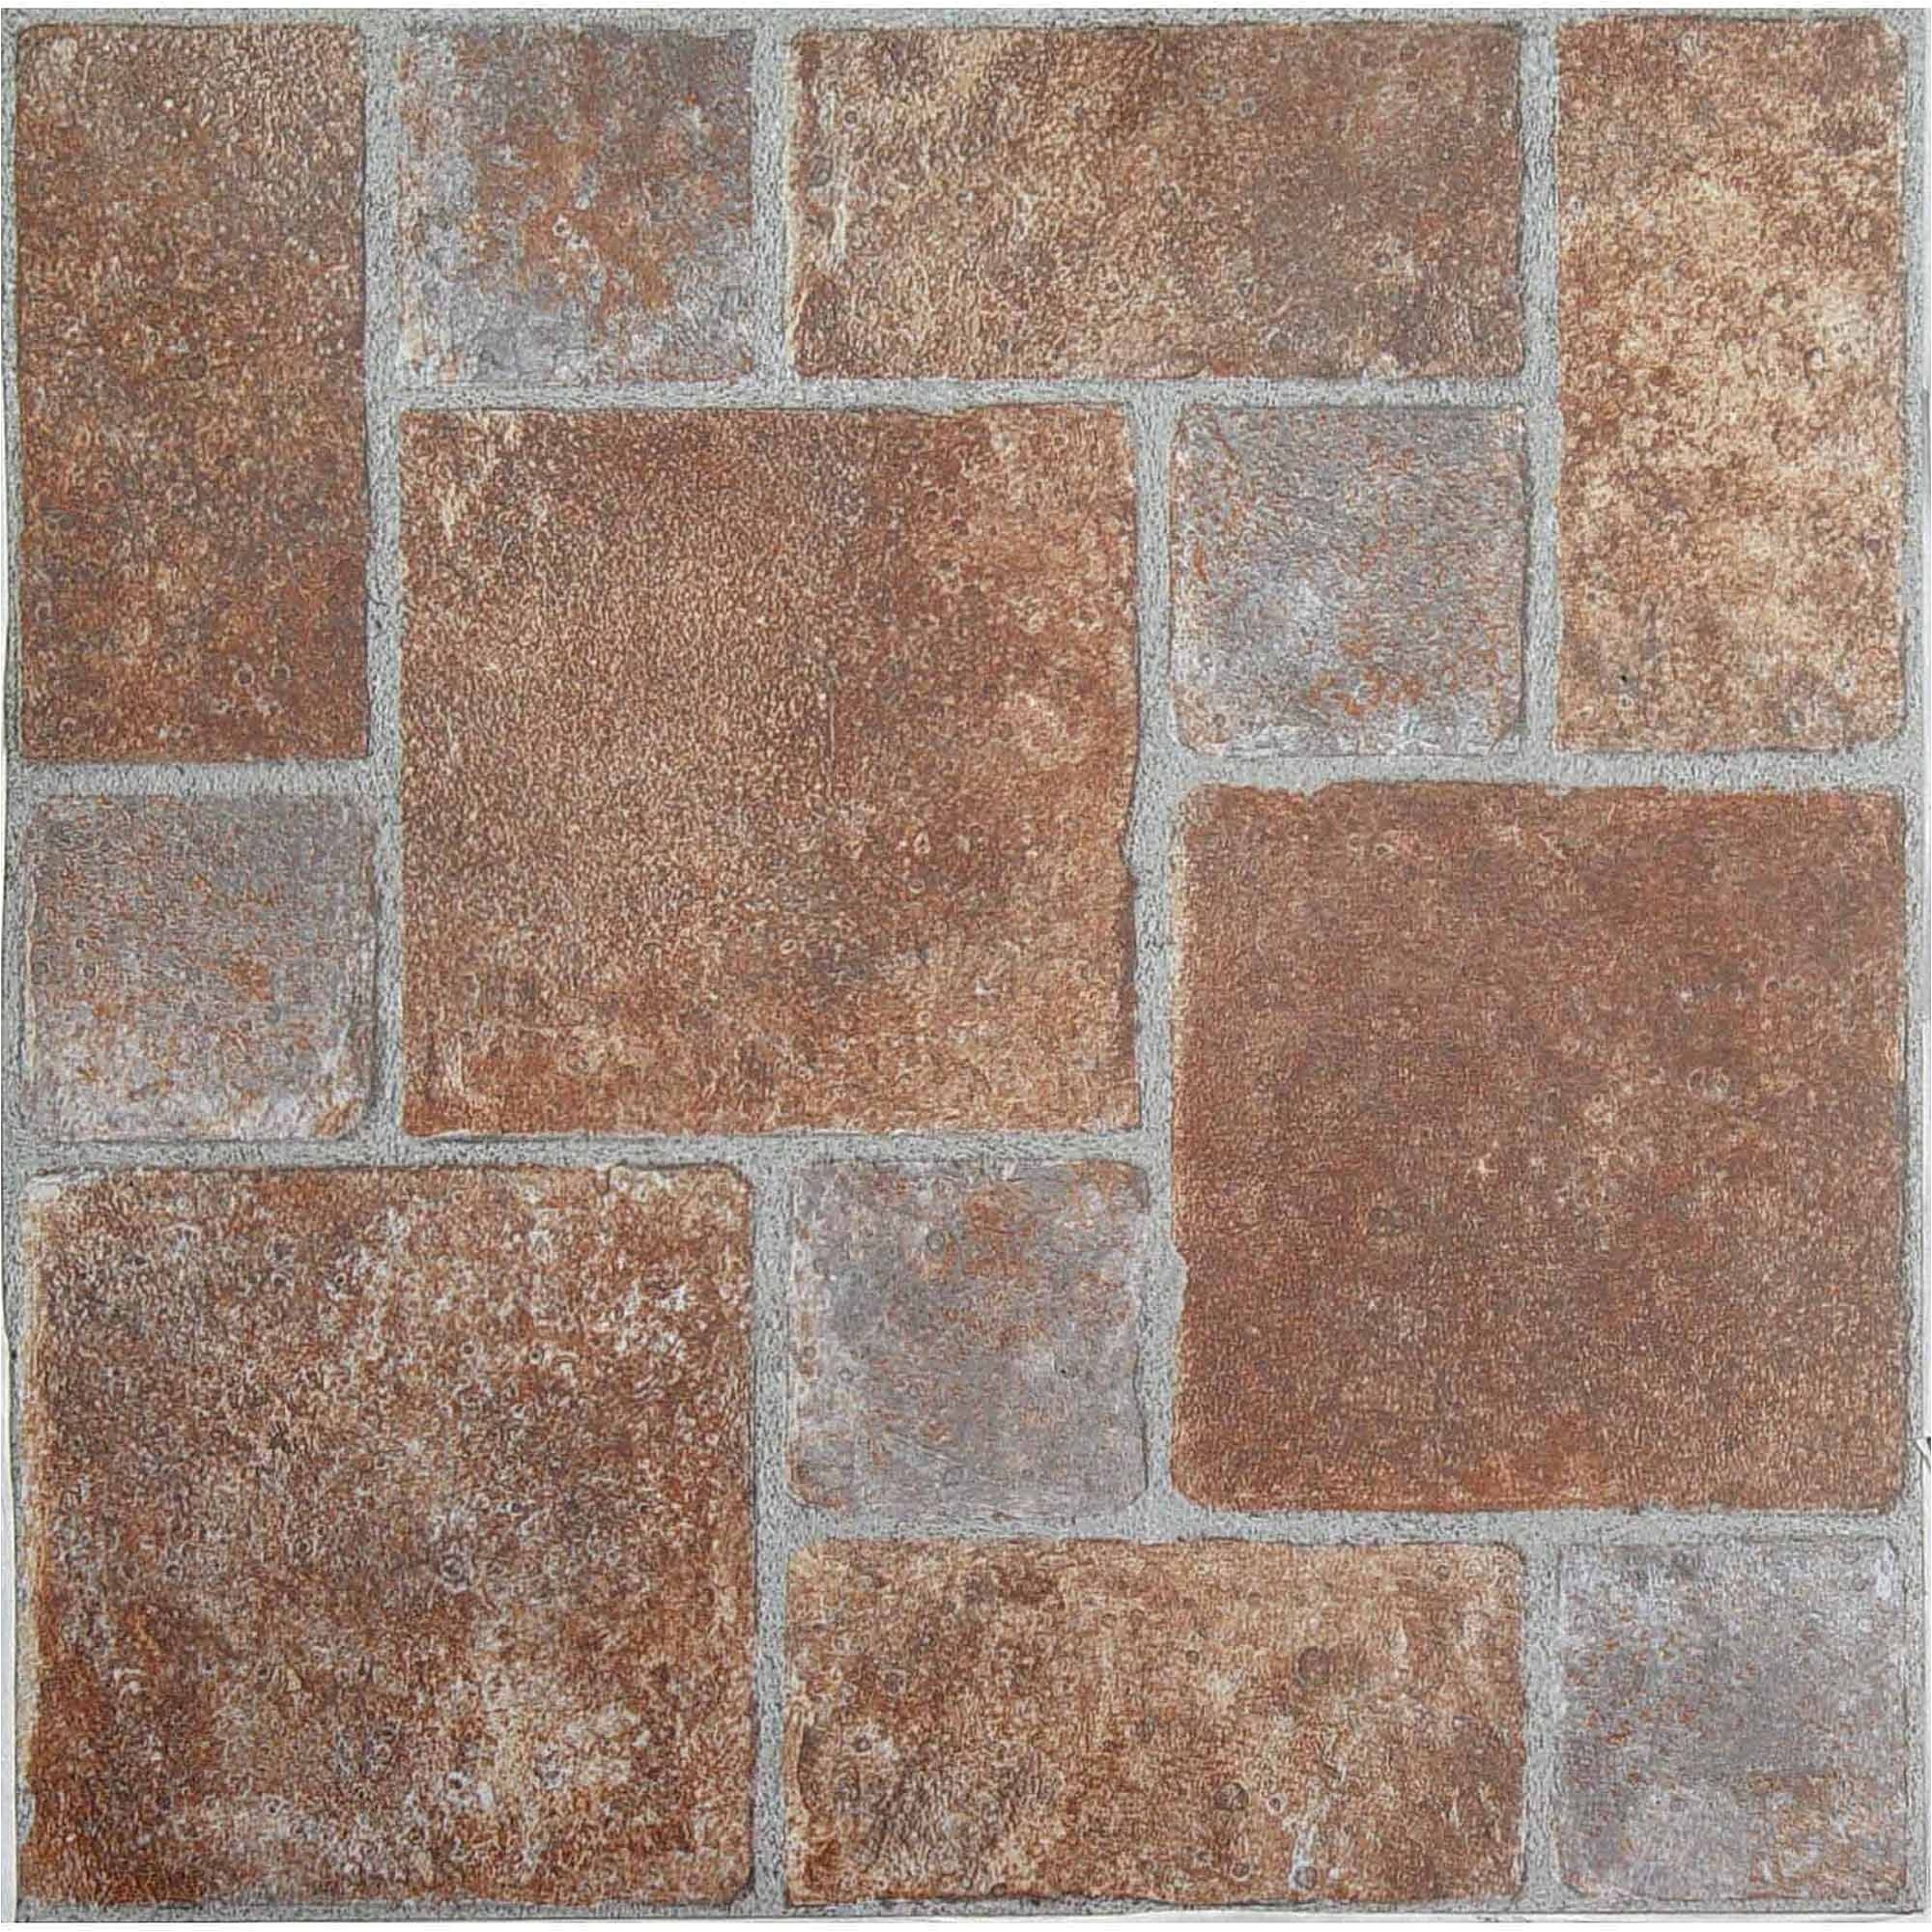 Homemade Wax for Tile Floors Peel and Stick Floor Tiles Home Hardware Http Nextsoft21 Com